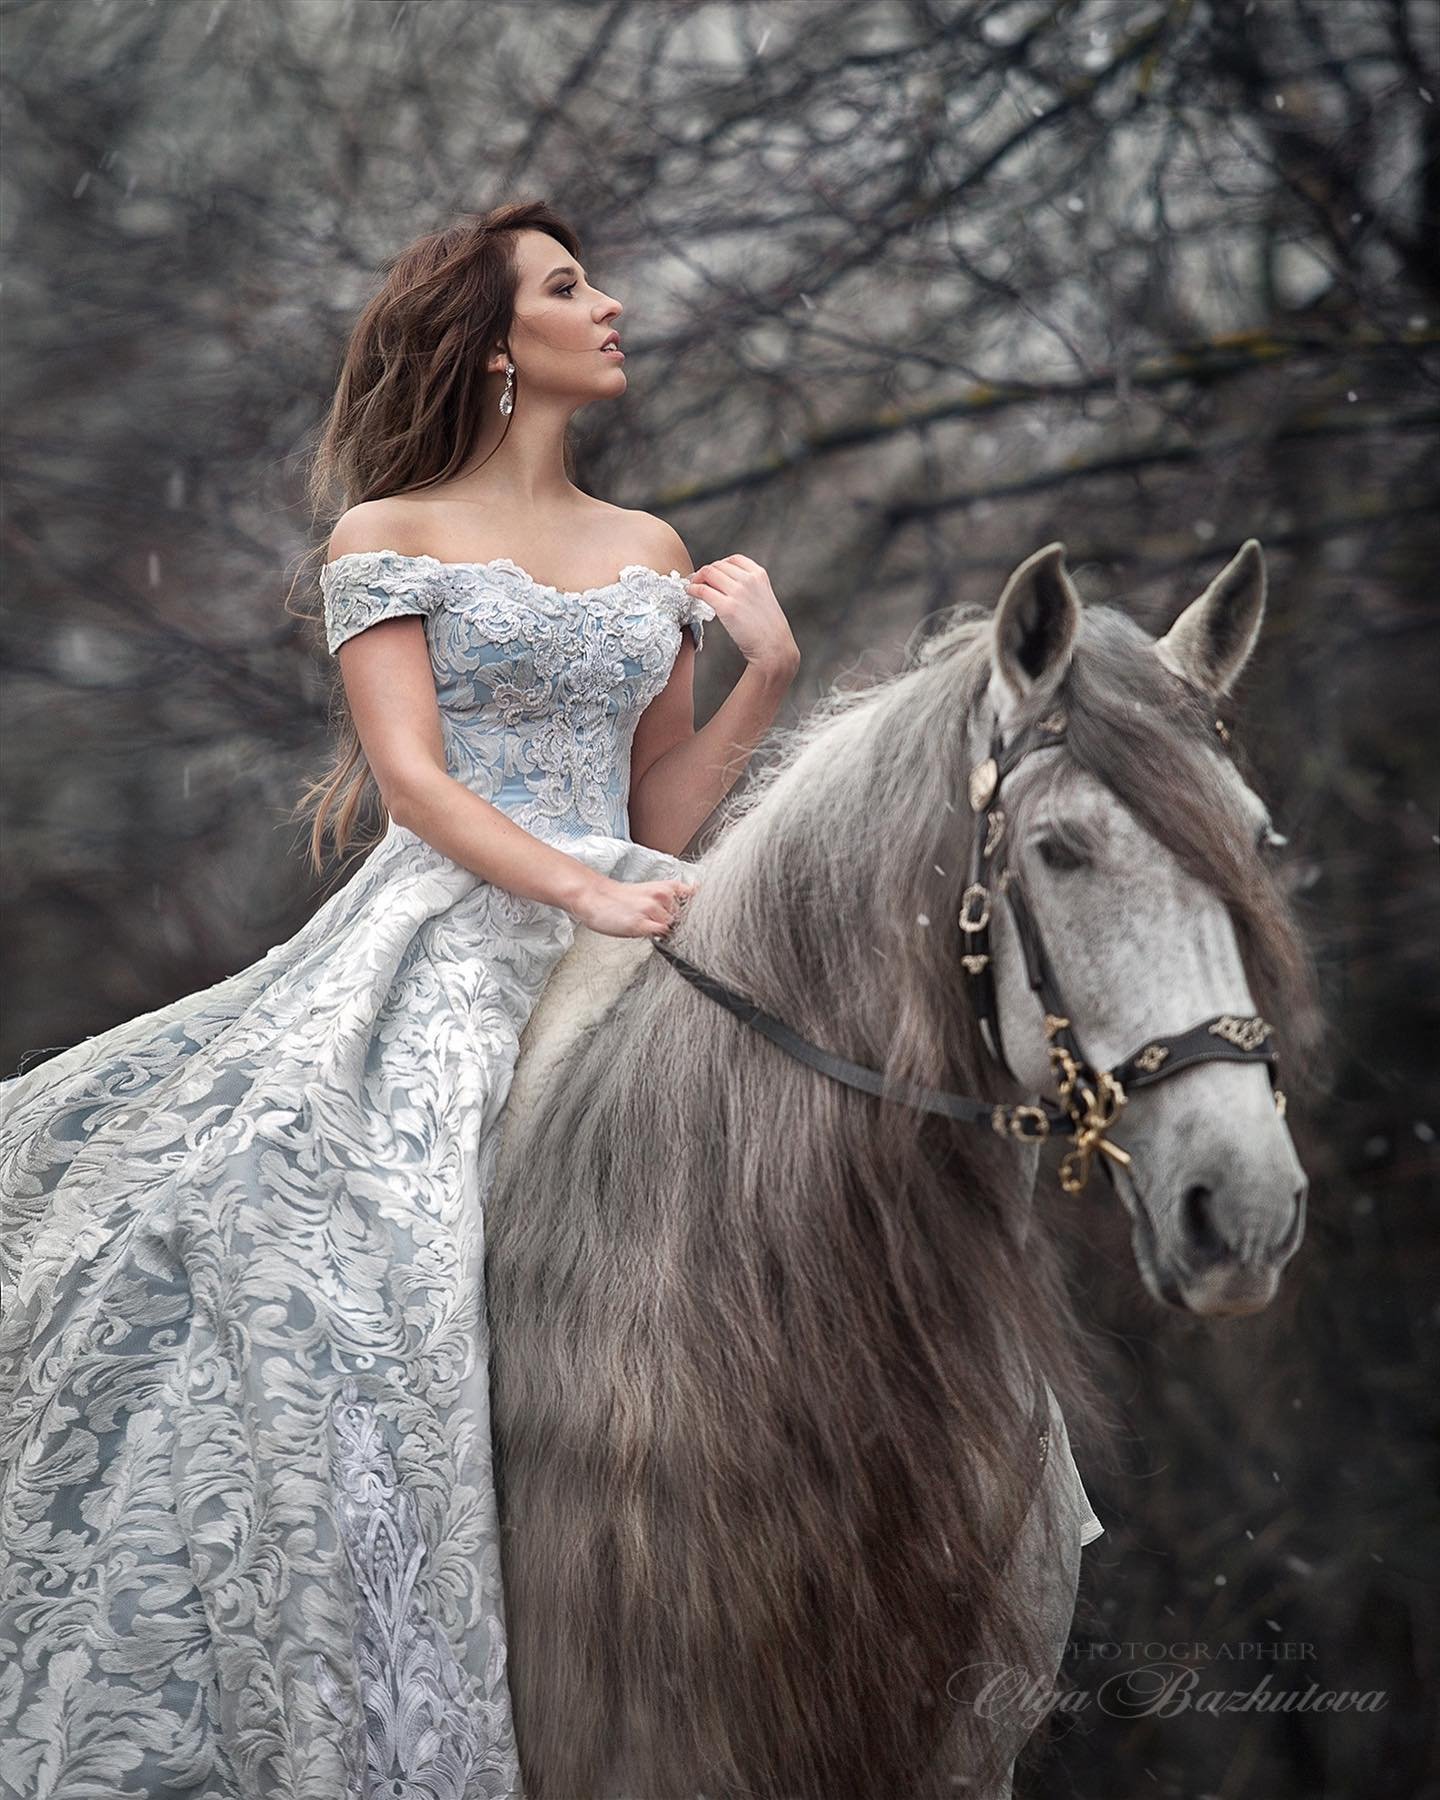 Olga Bazhutova fotografia equestre - Modelo montada a cavalo de vestido longo